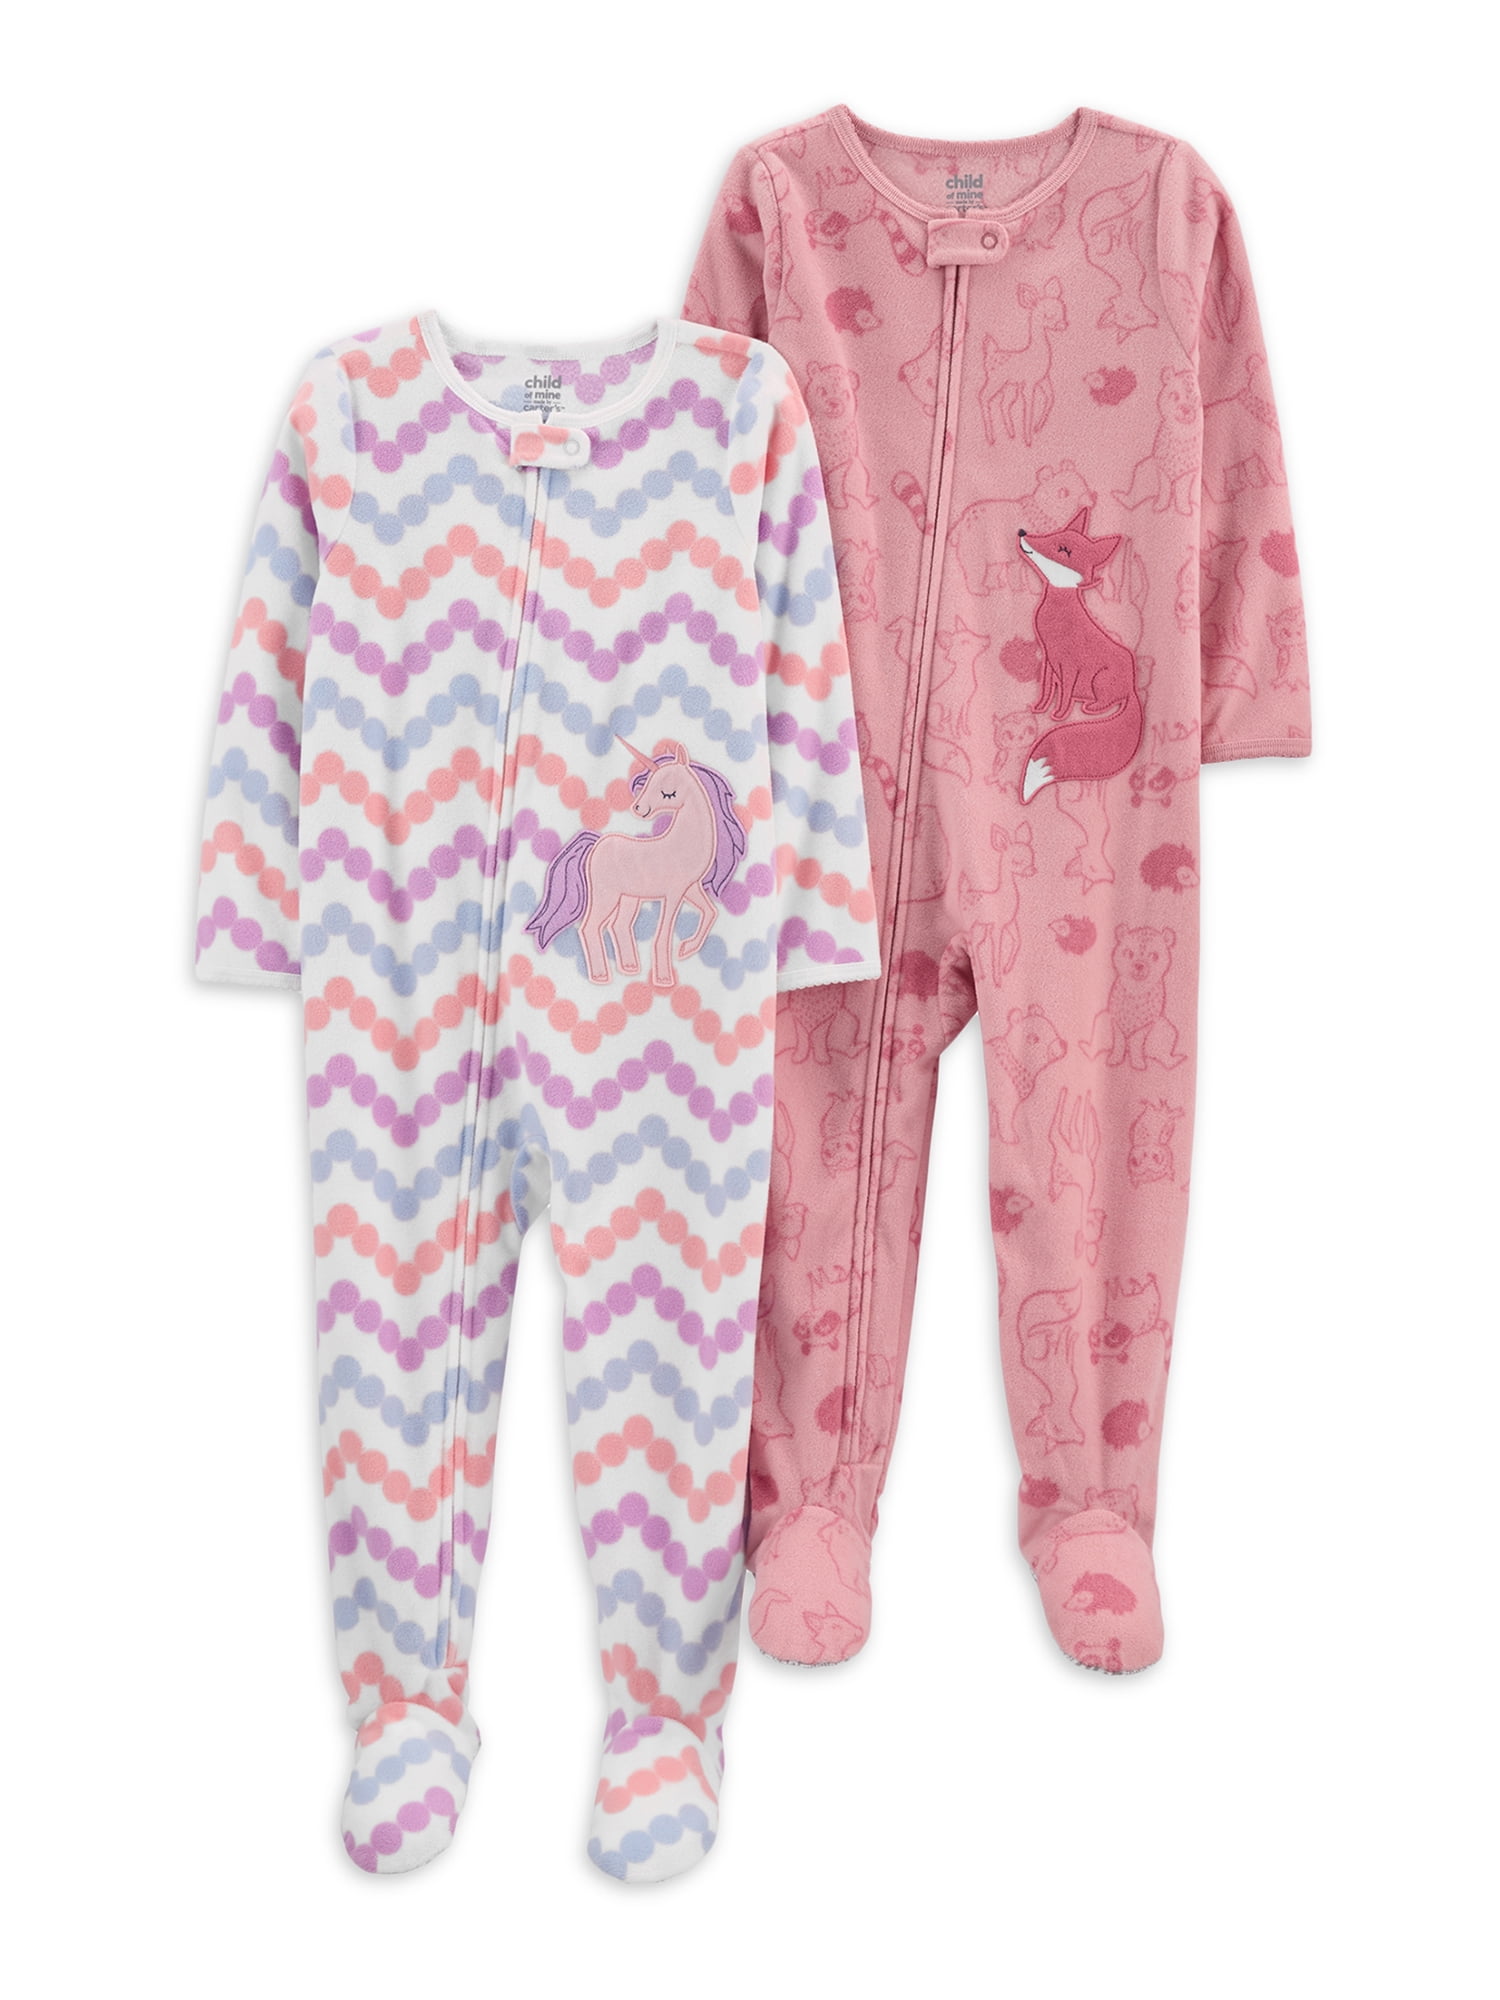 NWT Carter's Girls Sleepwear Polyester Cotton 1 piece Footed PJ Pajamas